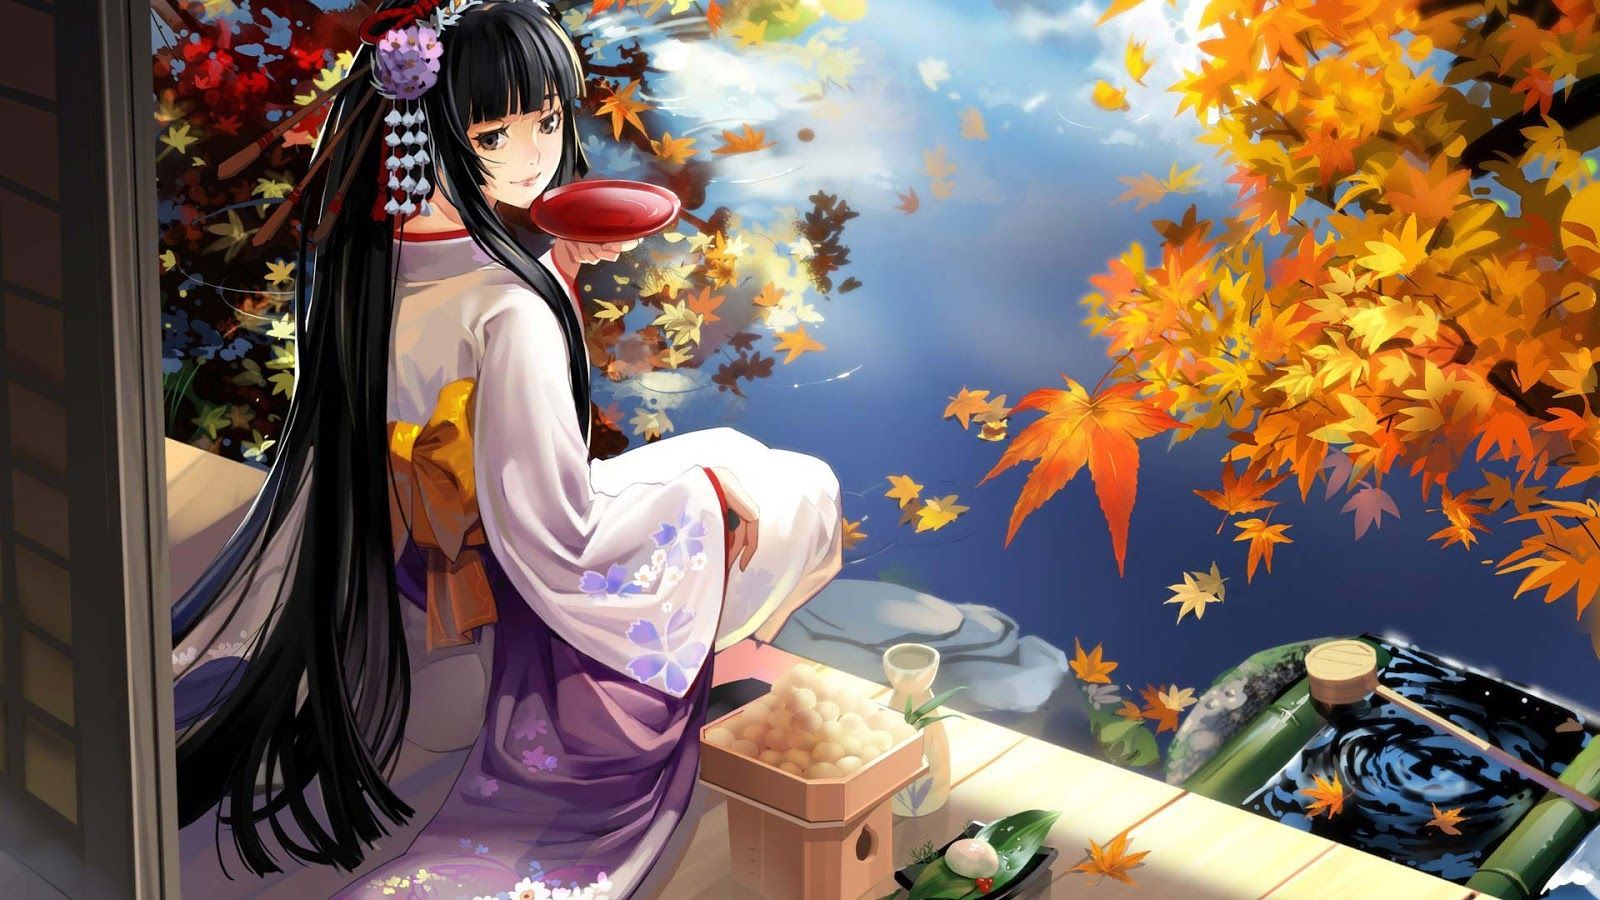 Beautiful Anime Girl Wallpaper, Best Cute Anime Girl HD Wallpaper, Looking for the best Cute Anime Wallpaper HD Picture